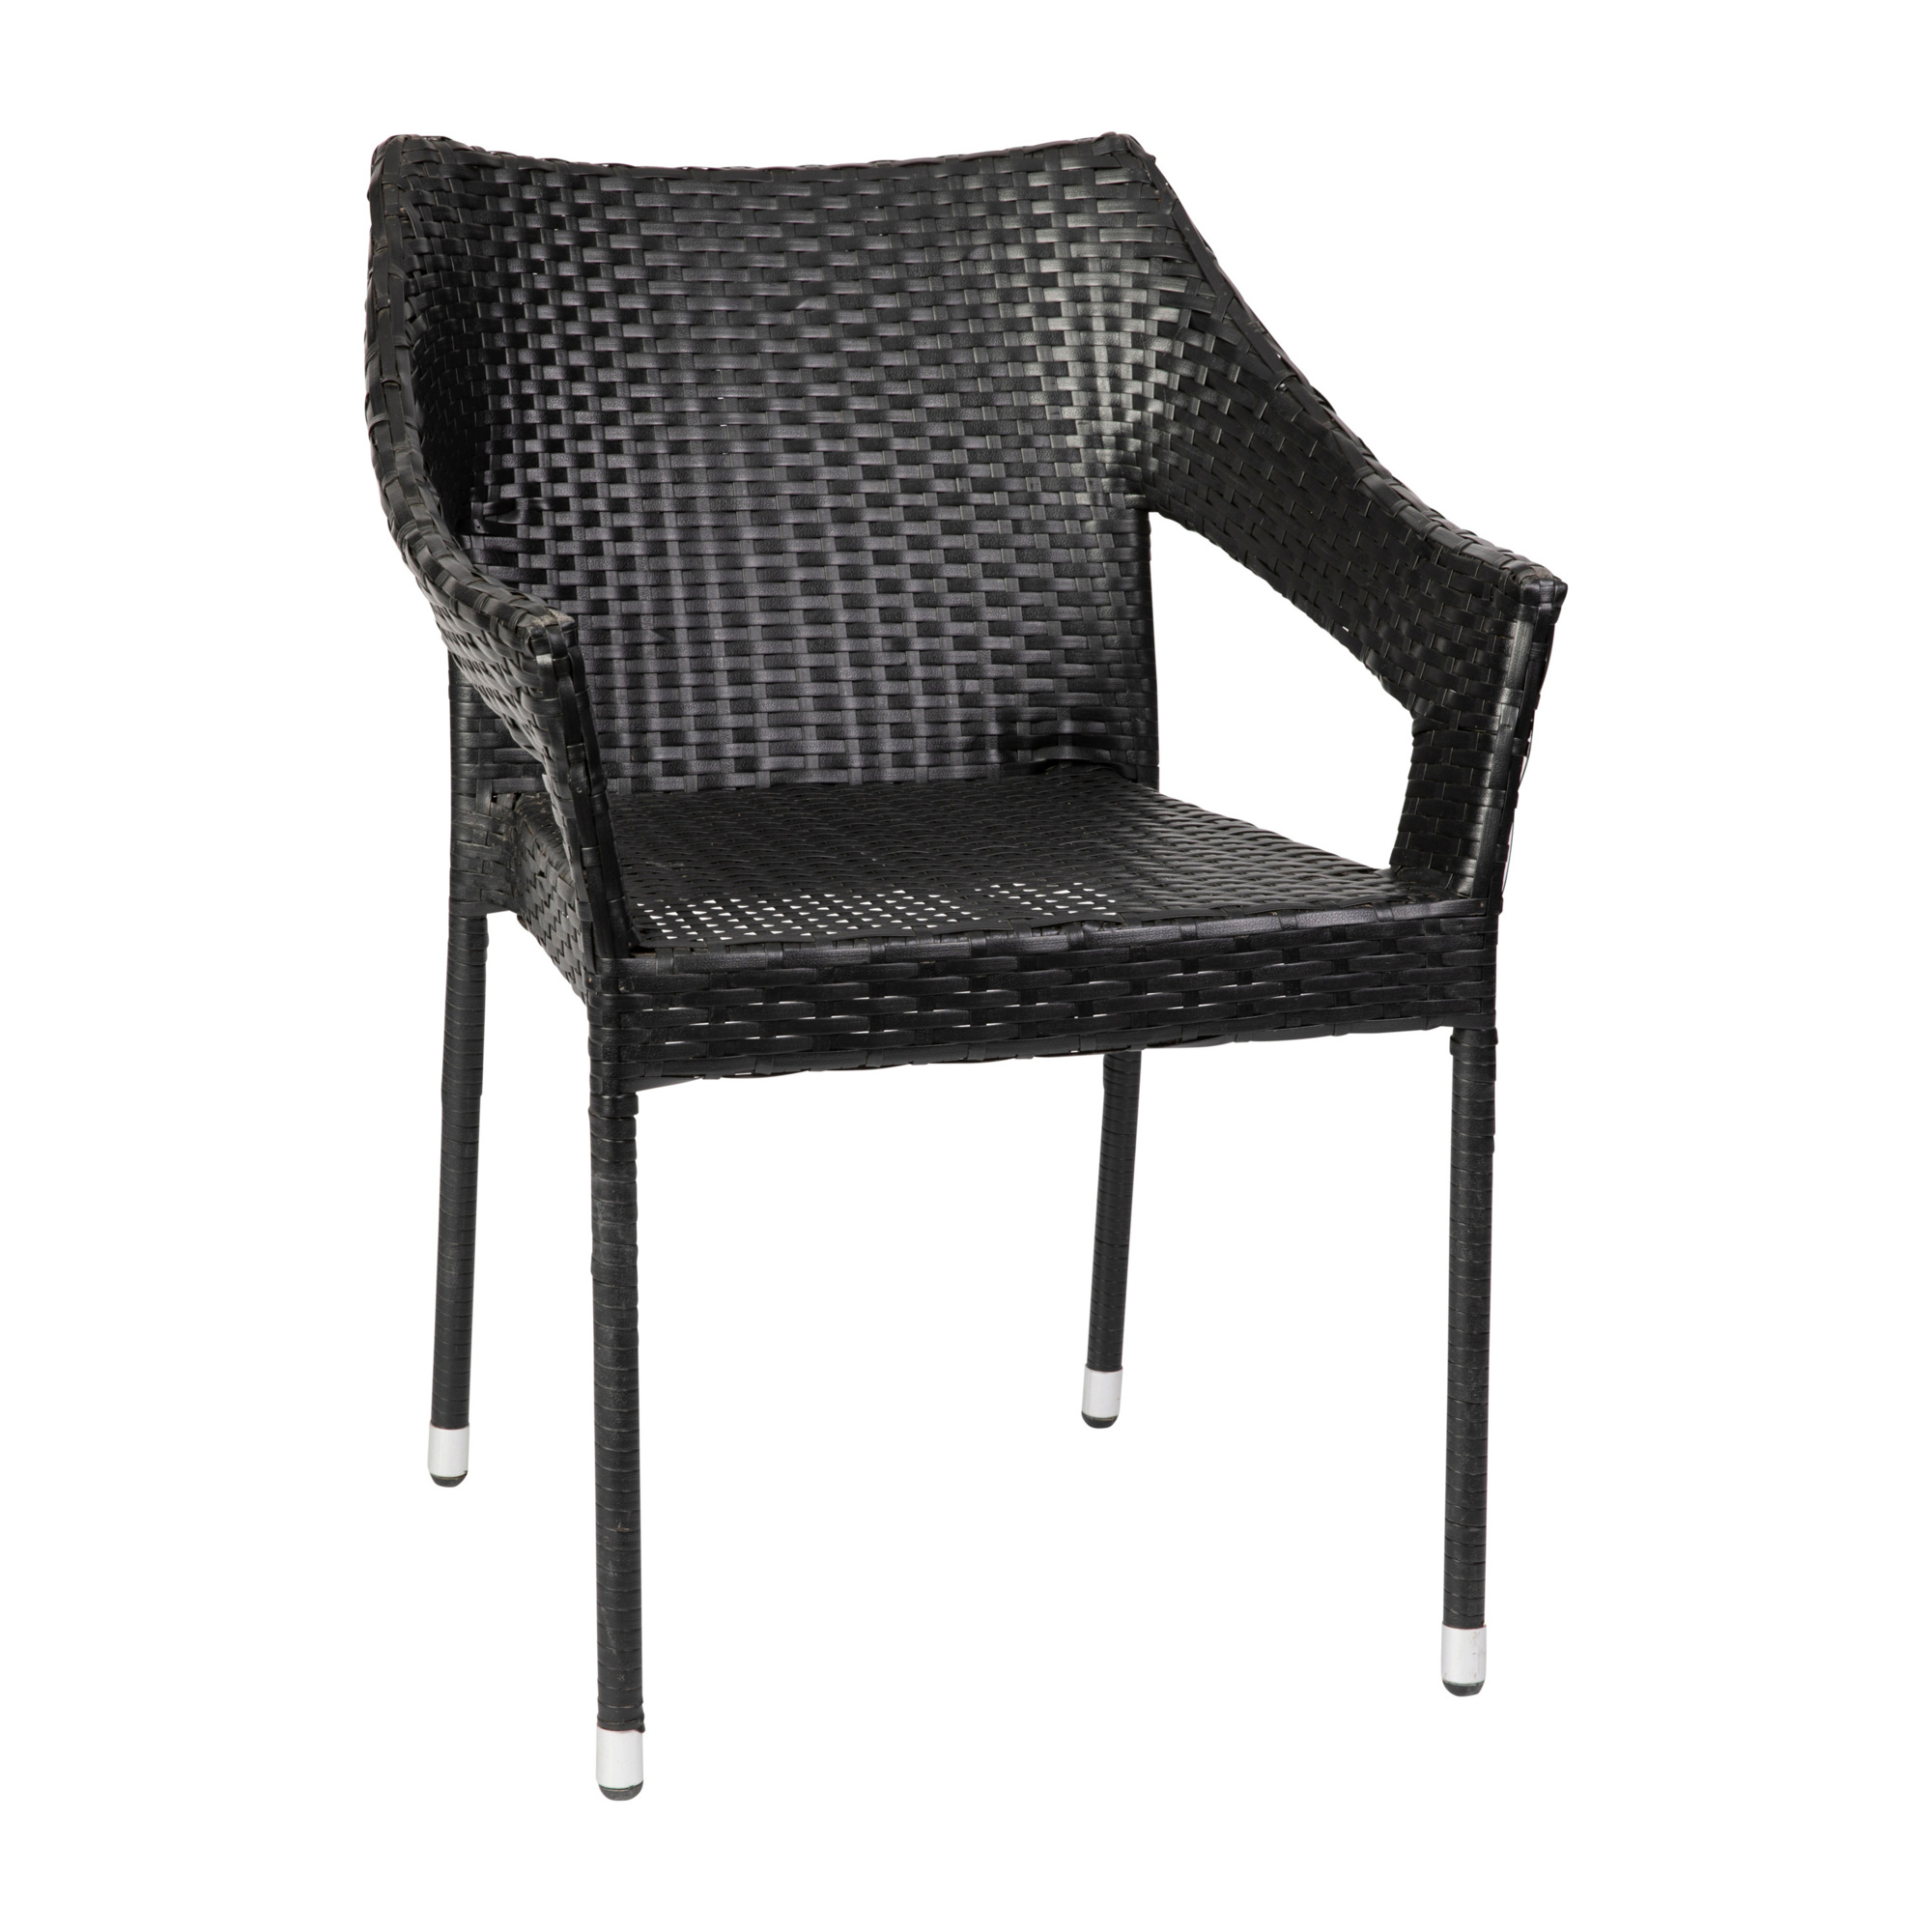 Flash Furniture, Black PE Rattan Wicker Patio Dining Chair, Primary Color Black, Material Steel, Width 23.5 in, Model TTTT02BK